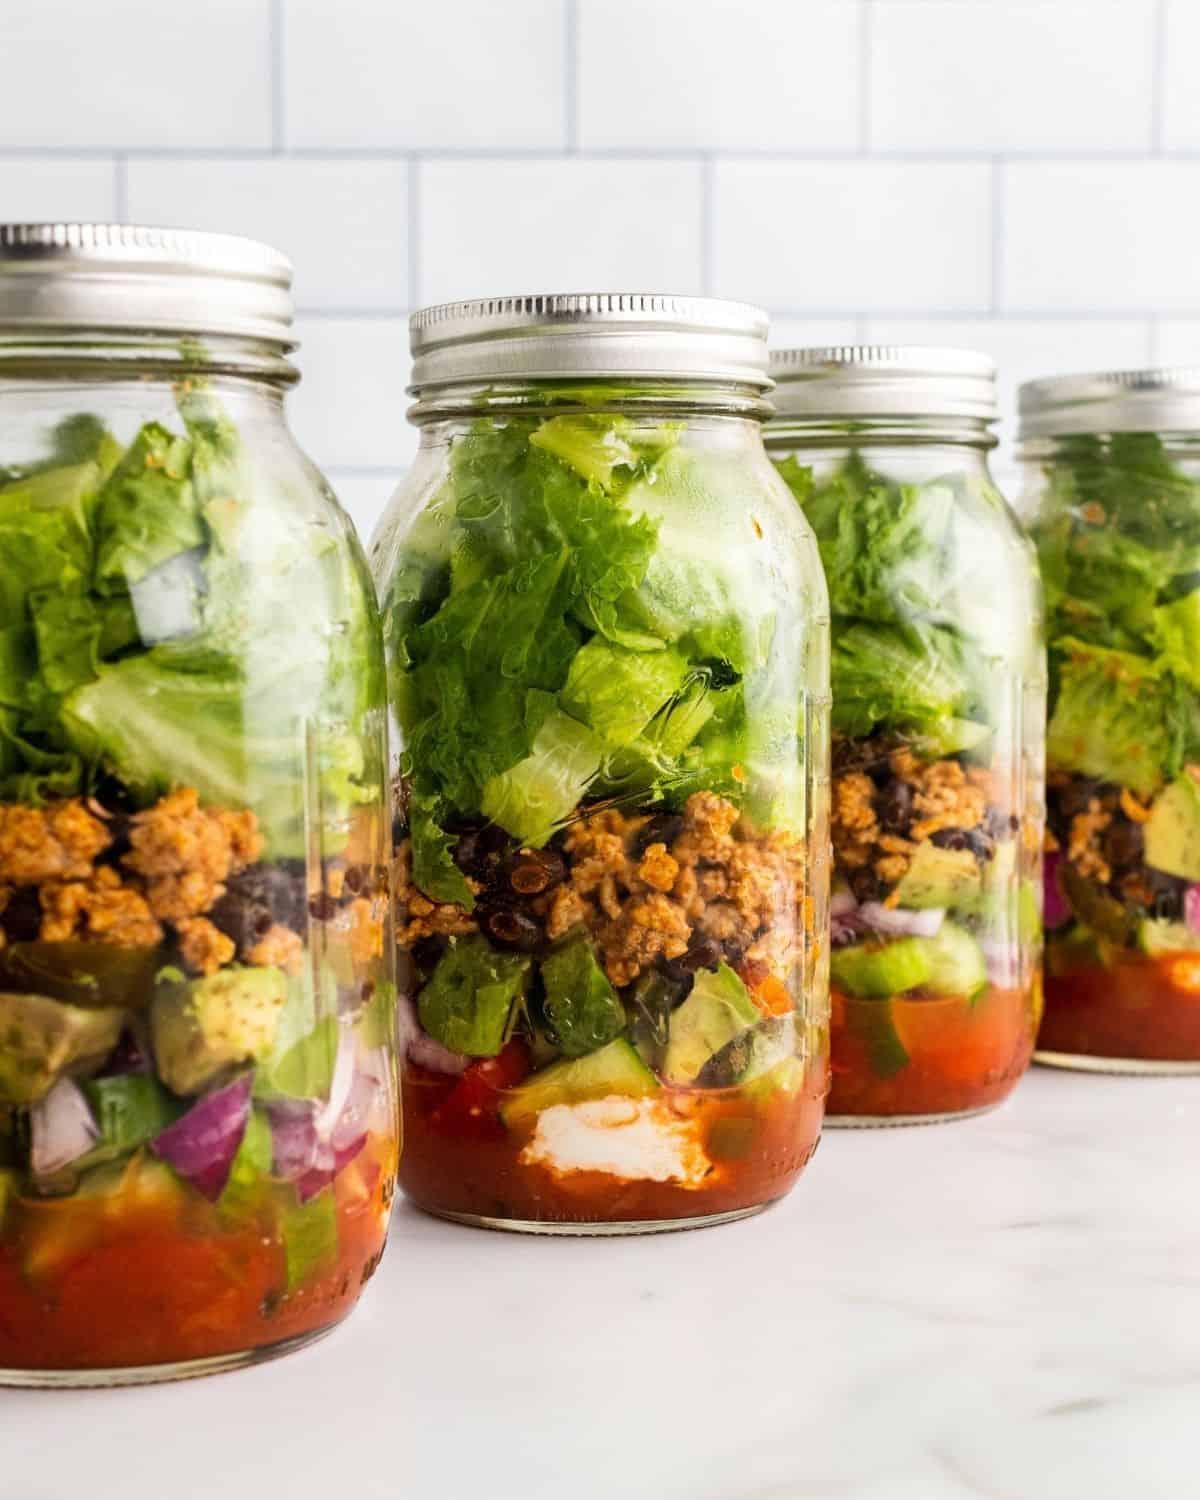 Taco Mason Jar Salads for Easy & Healthy Meal Prep